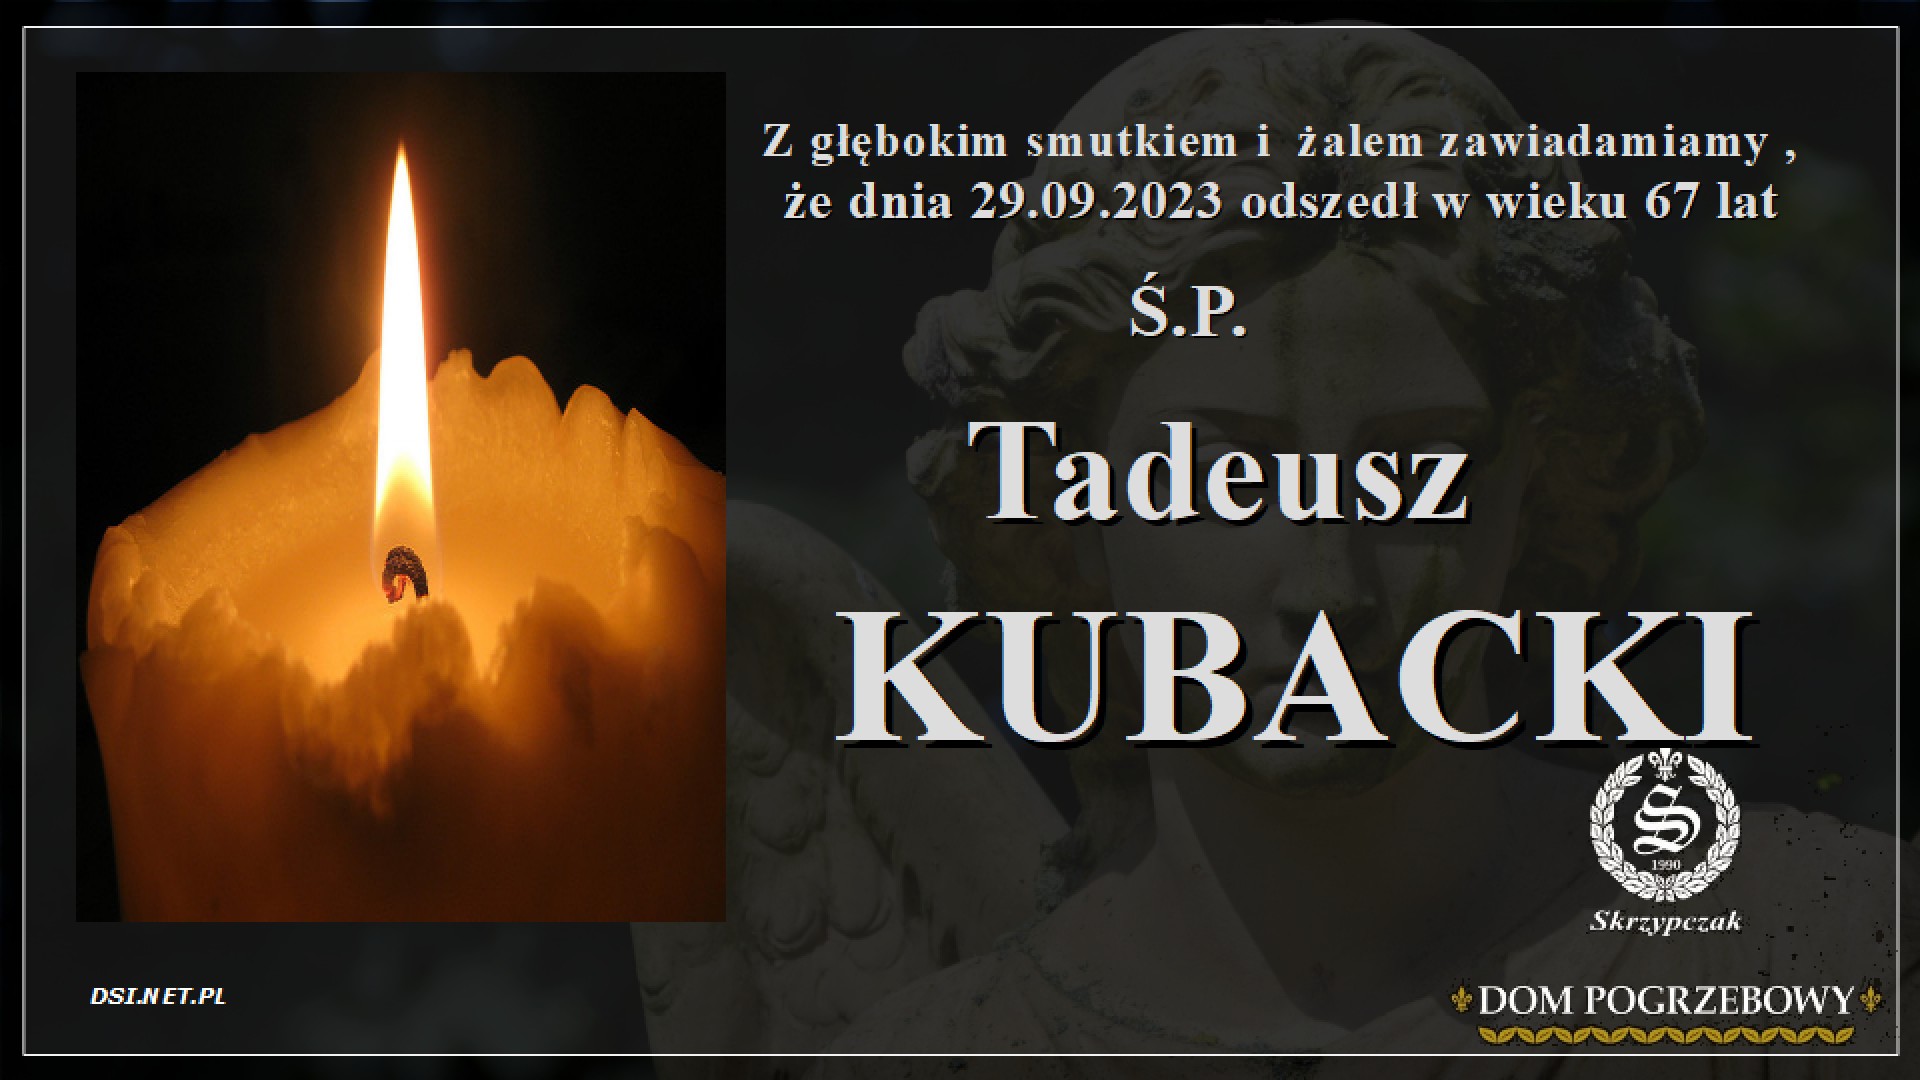 Ś.P. Tadeusz Kubacki